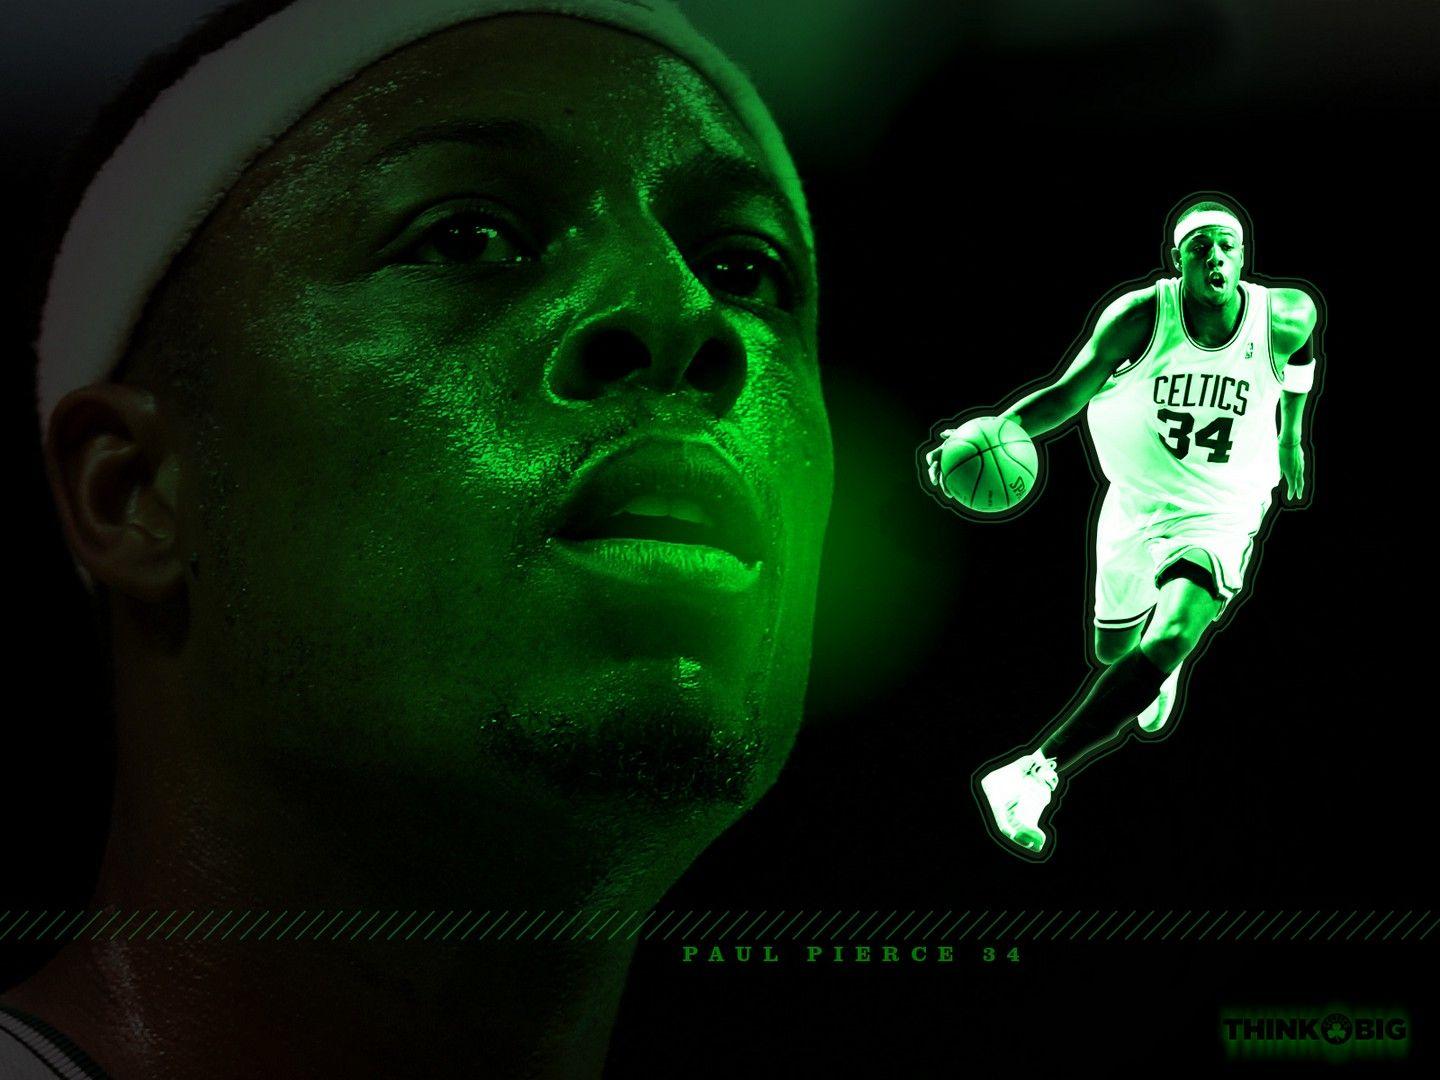 Paul Pierce New HD Wallpaper 2012 All About Basketball